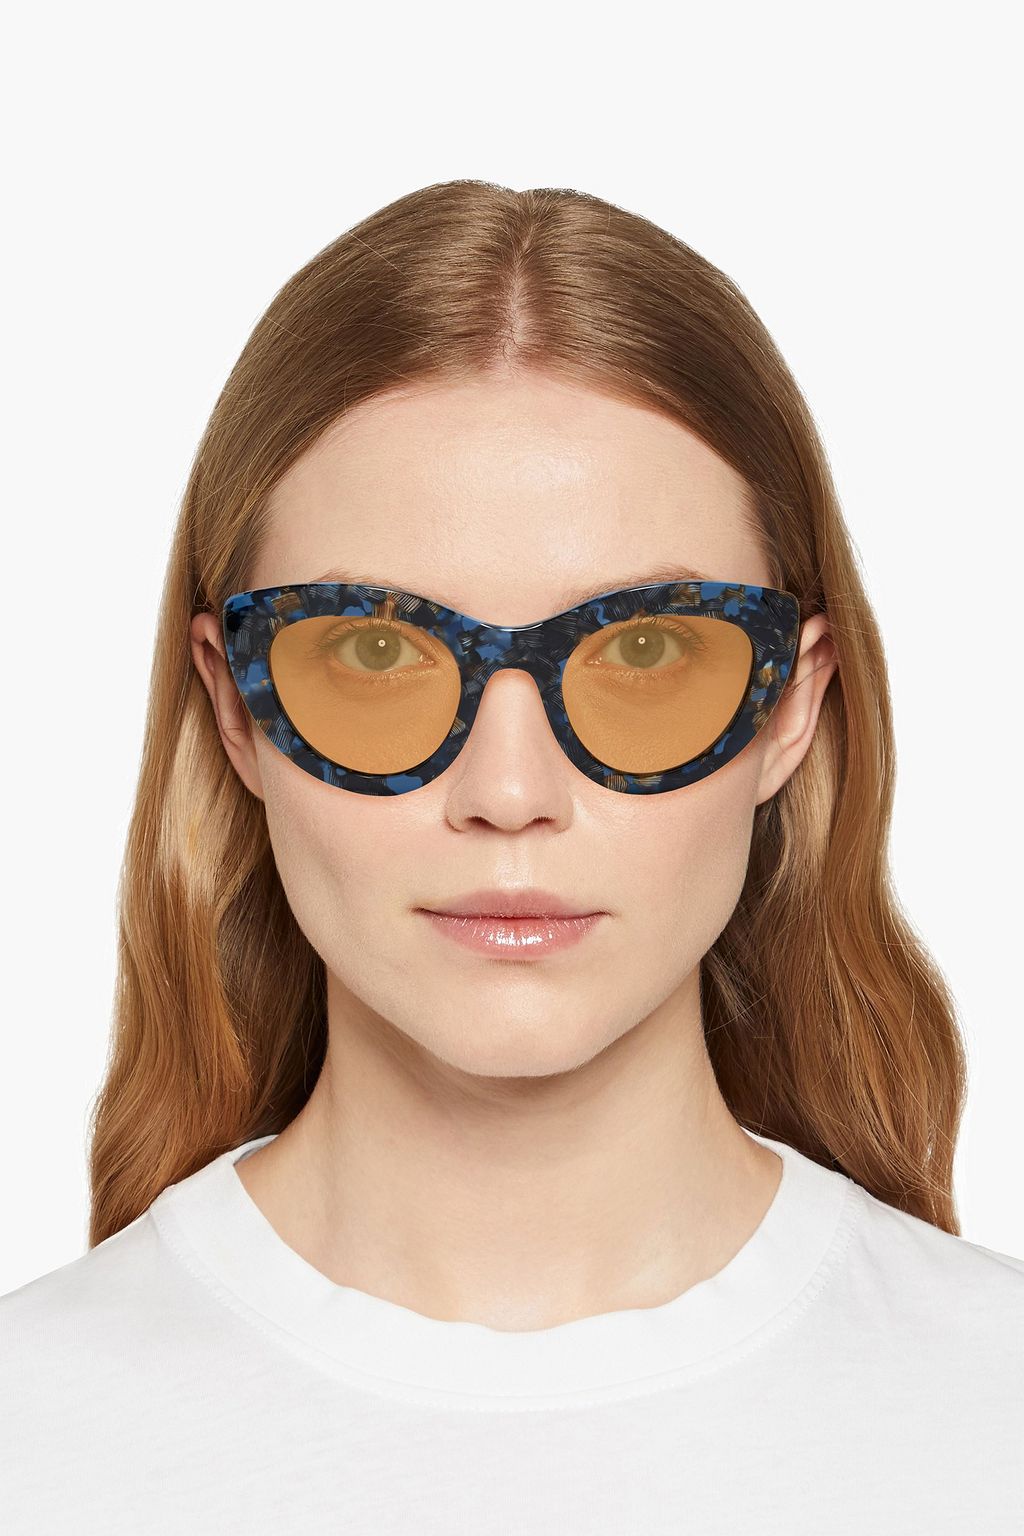 GANNI
Cat-eye printed acetate sunglasses